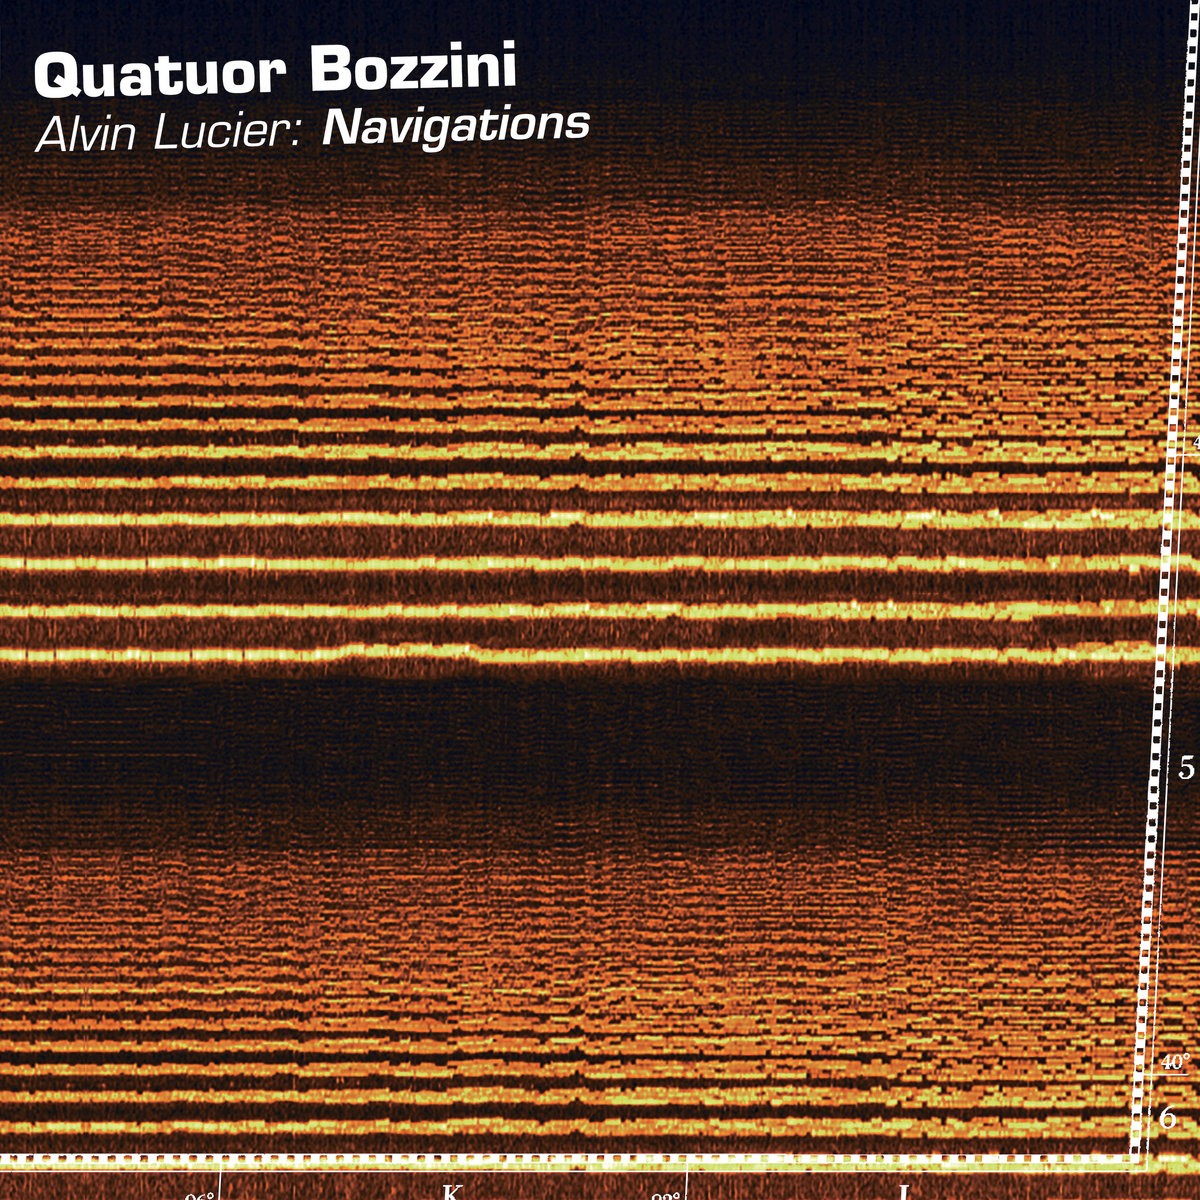 Quatuor Bozzini Pay Fitting Tribute to a Key Experimental Figure on 'Alvin Lucier: Navigations' 